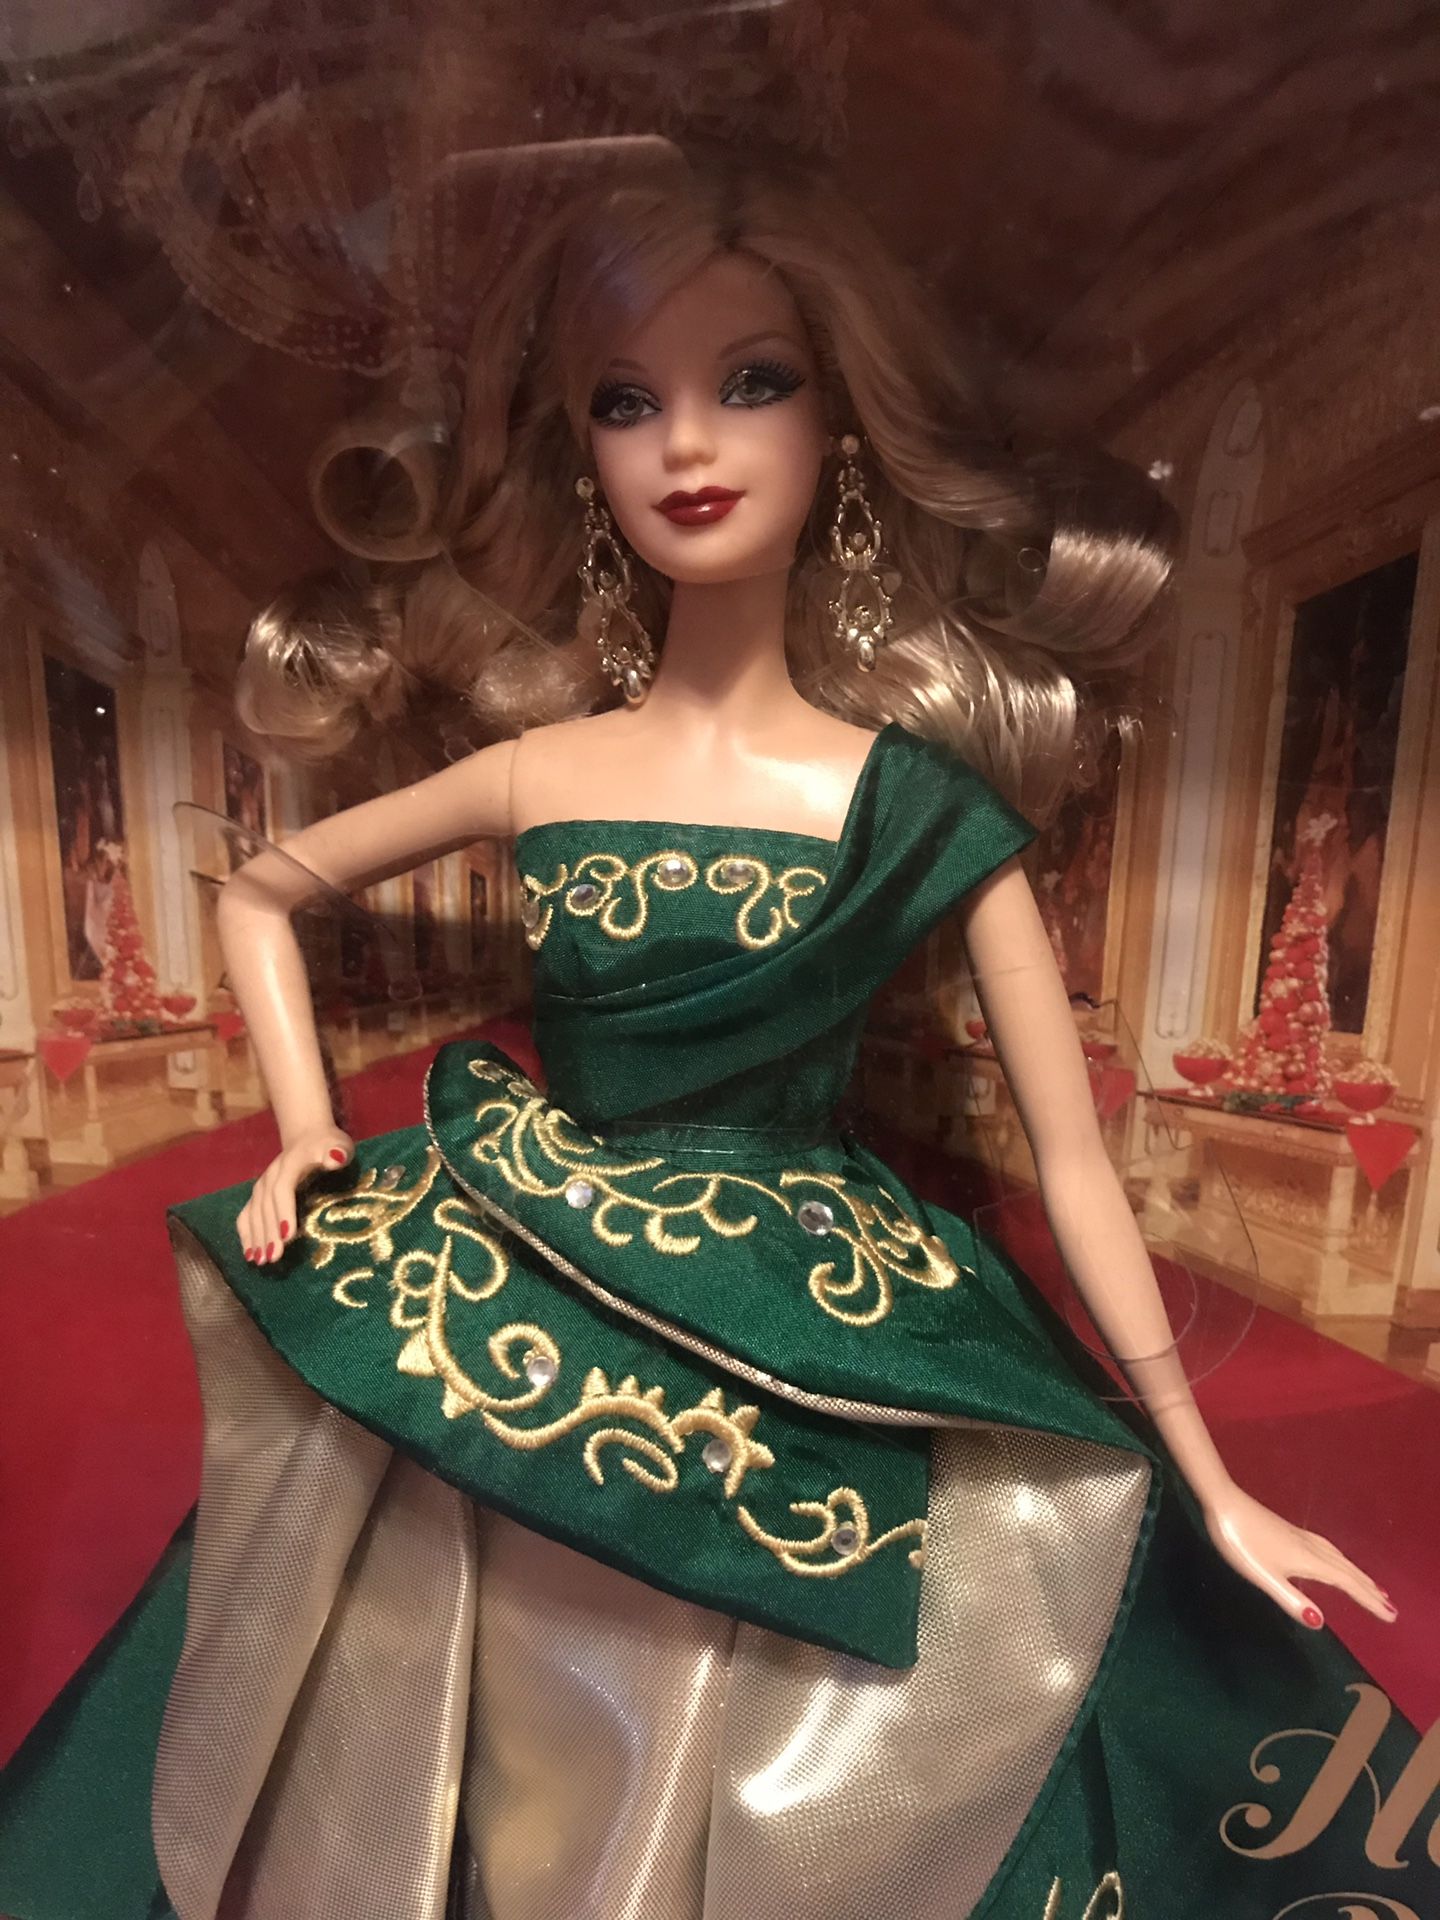 Holiday Barbie 2011